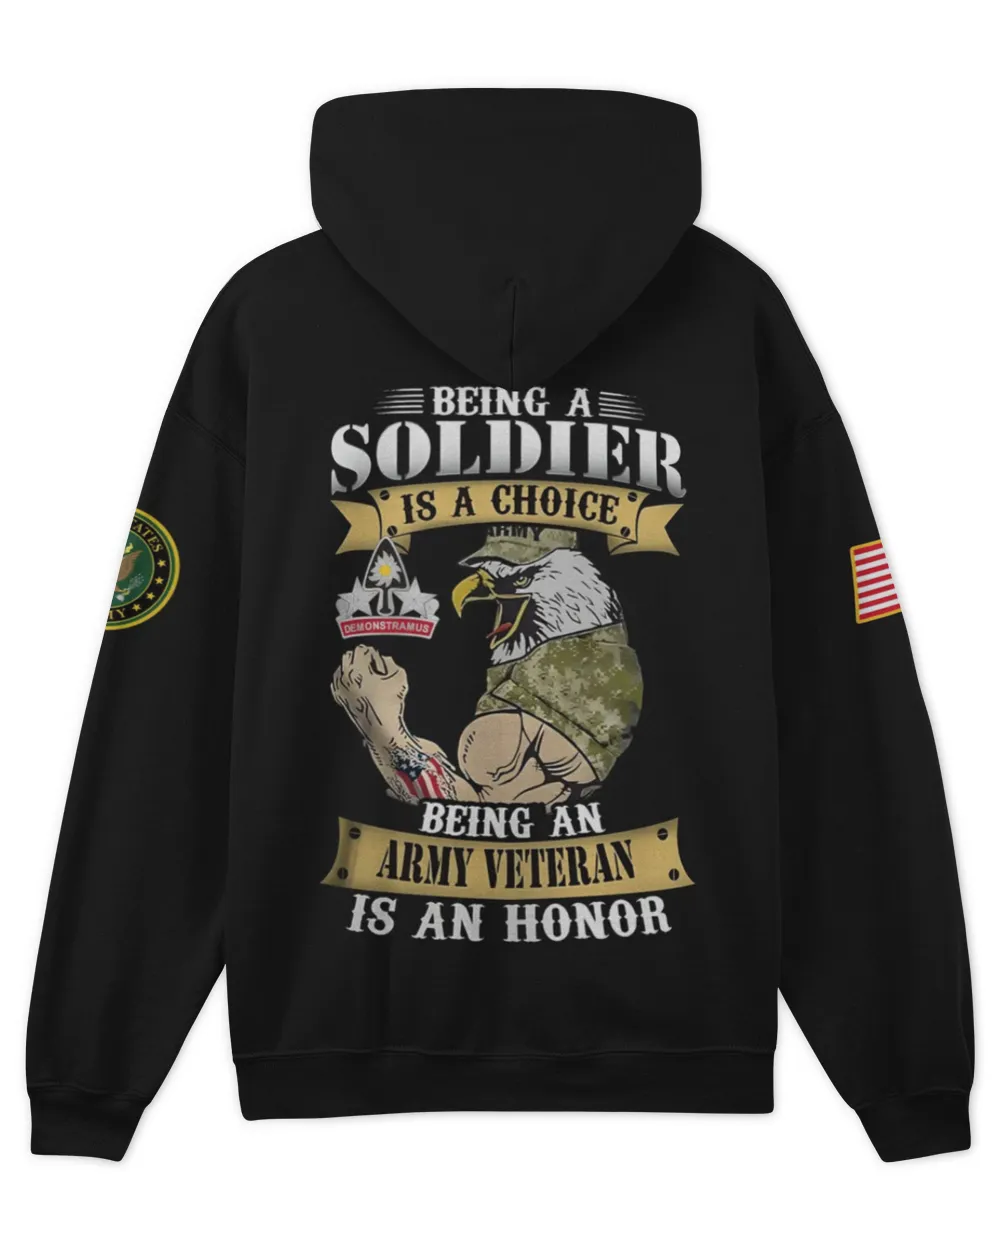 31st Engineer Battalion Echo Company  Tshirt